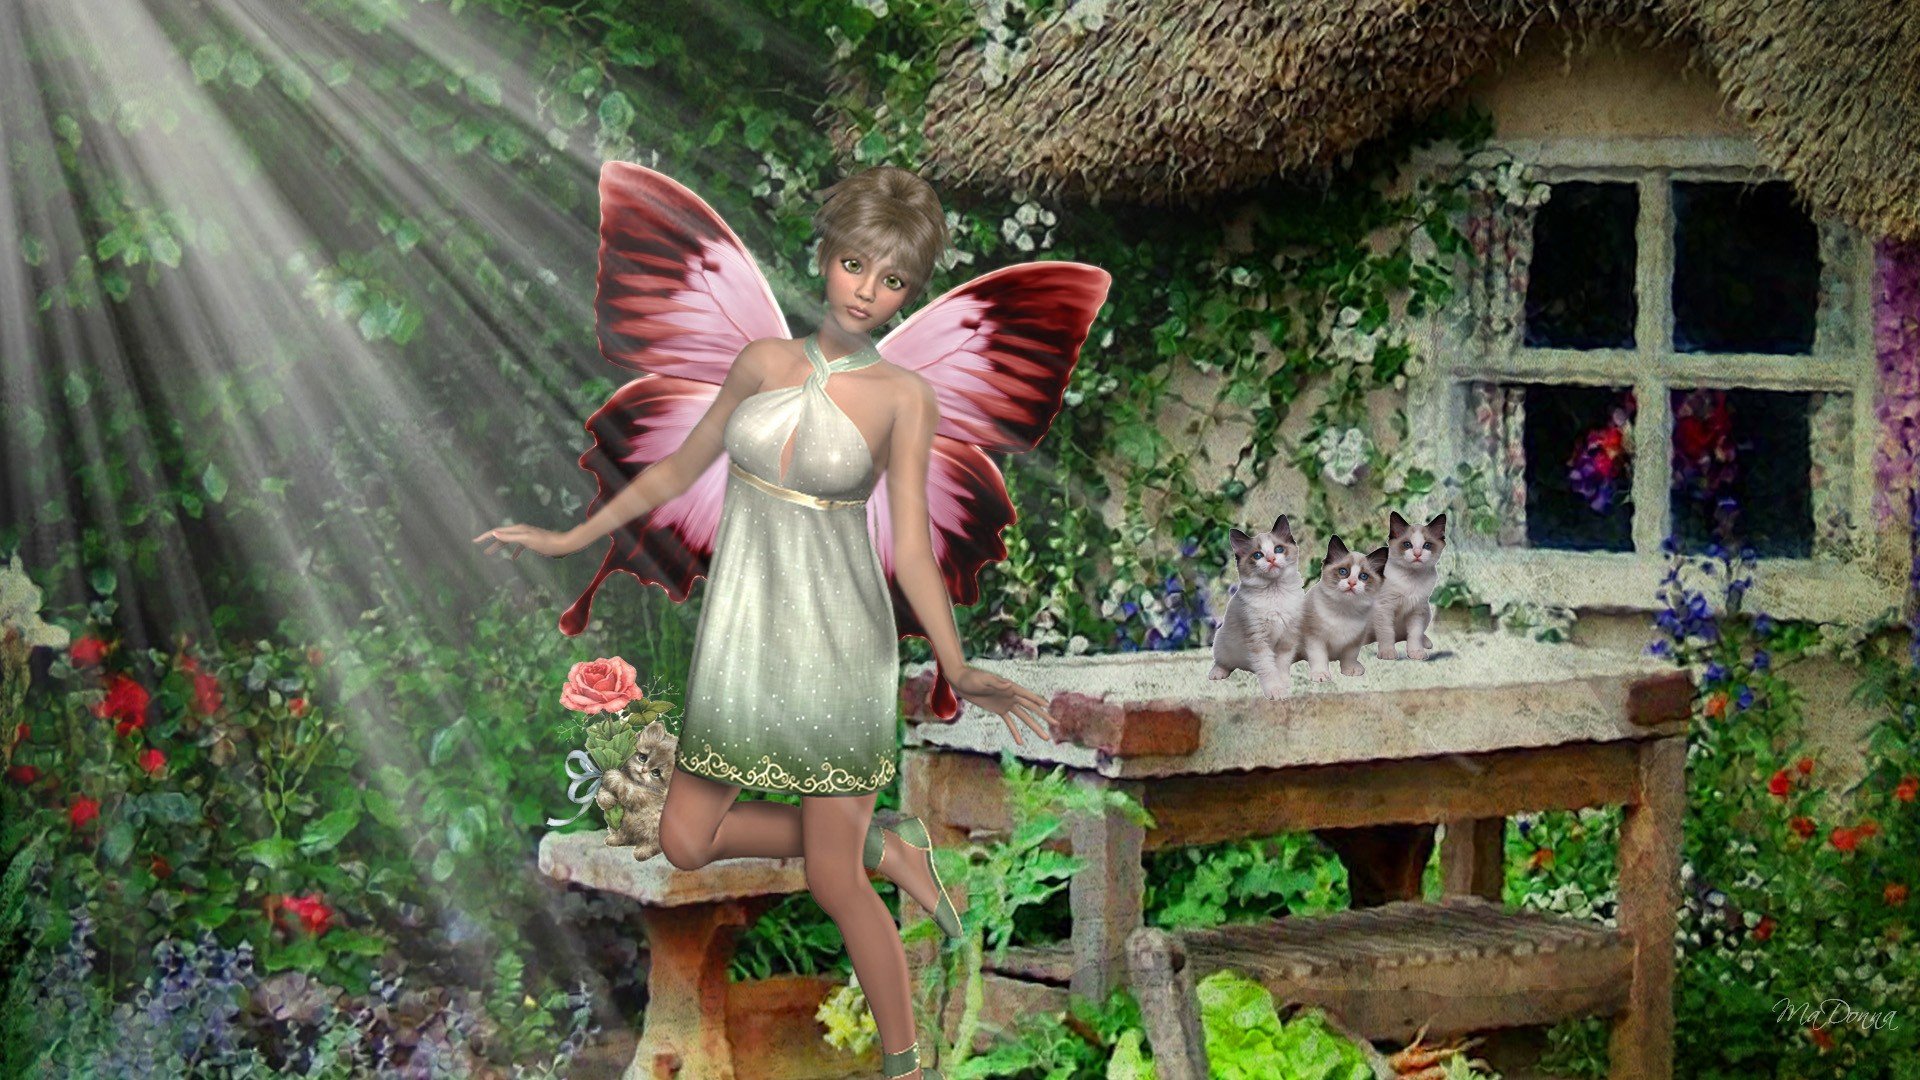 Fantasy Fairy HD Wallpaper